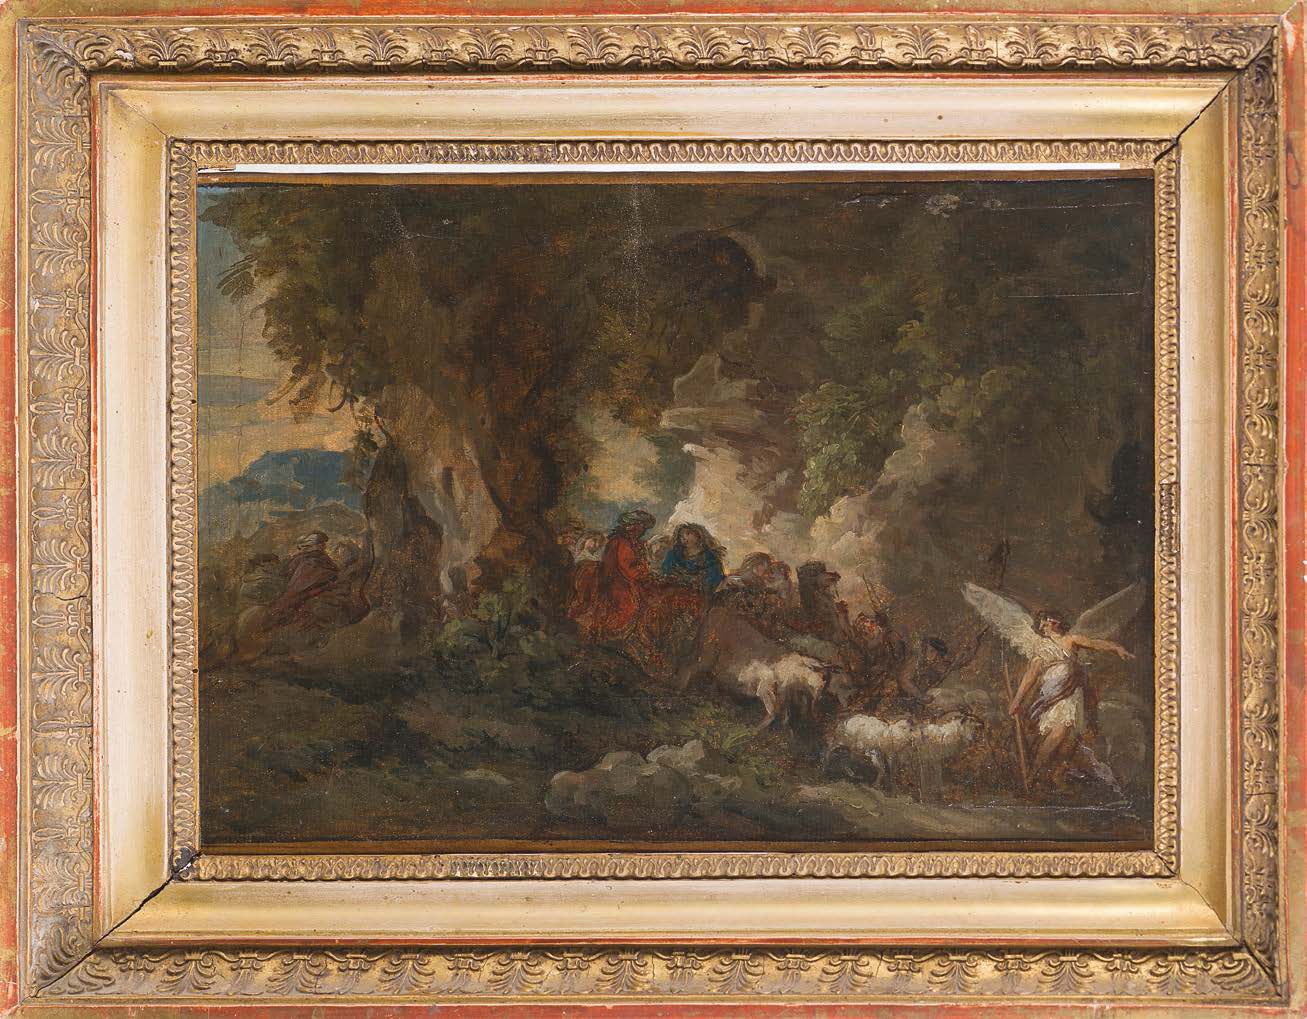 Jean Jacques LAGRENEE (Paris 1739 - 1821) 大篷车场景与飞往埃及
画布上的泥灰纸 23 x 33 cm
(损坏和修复)